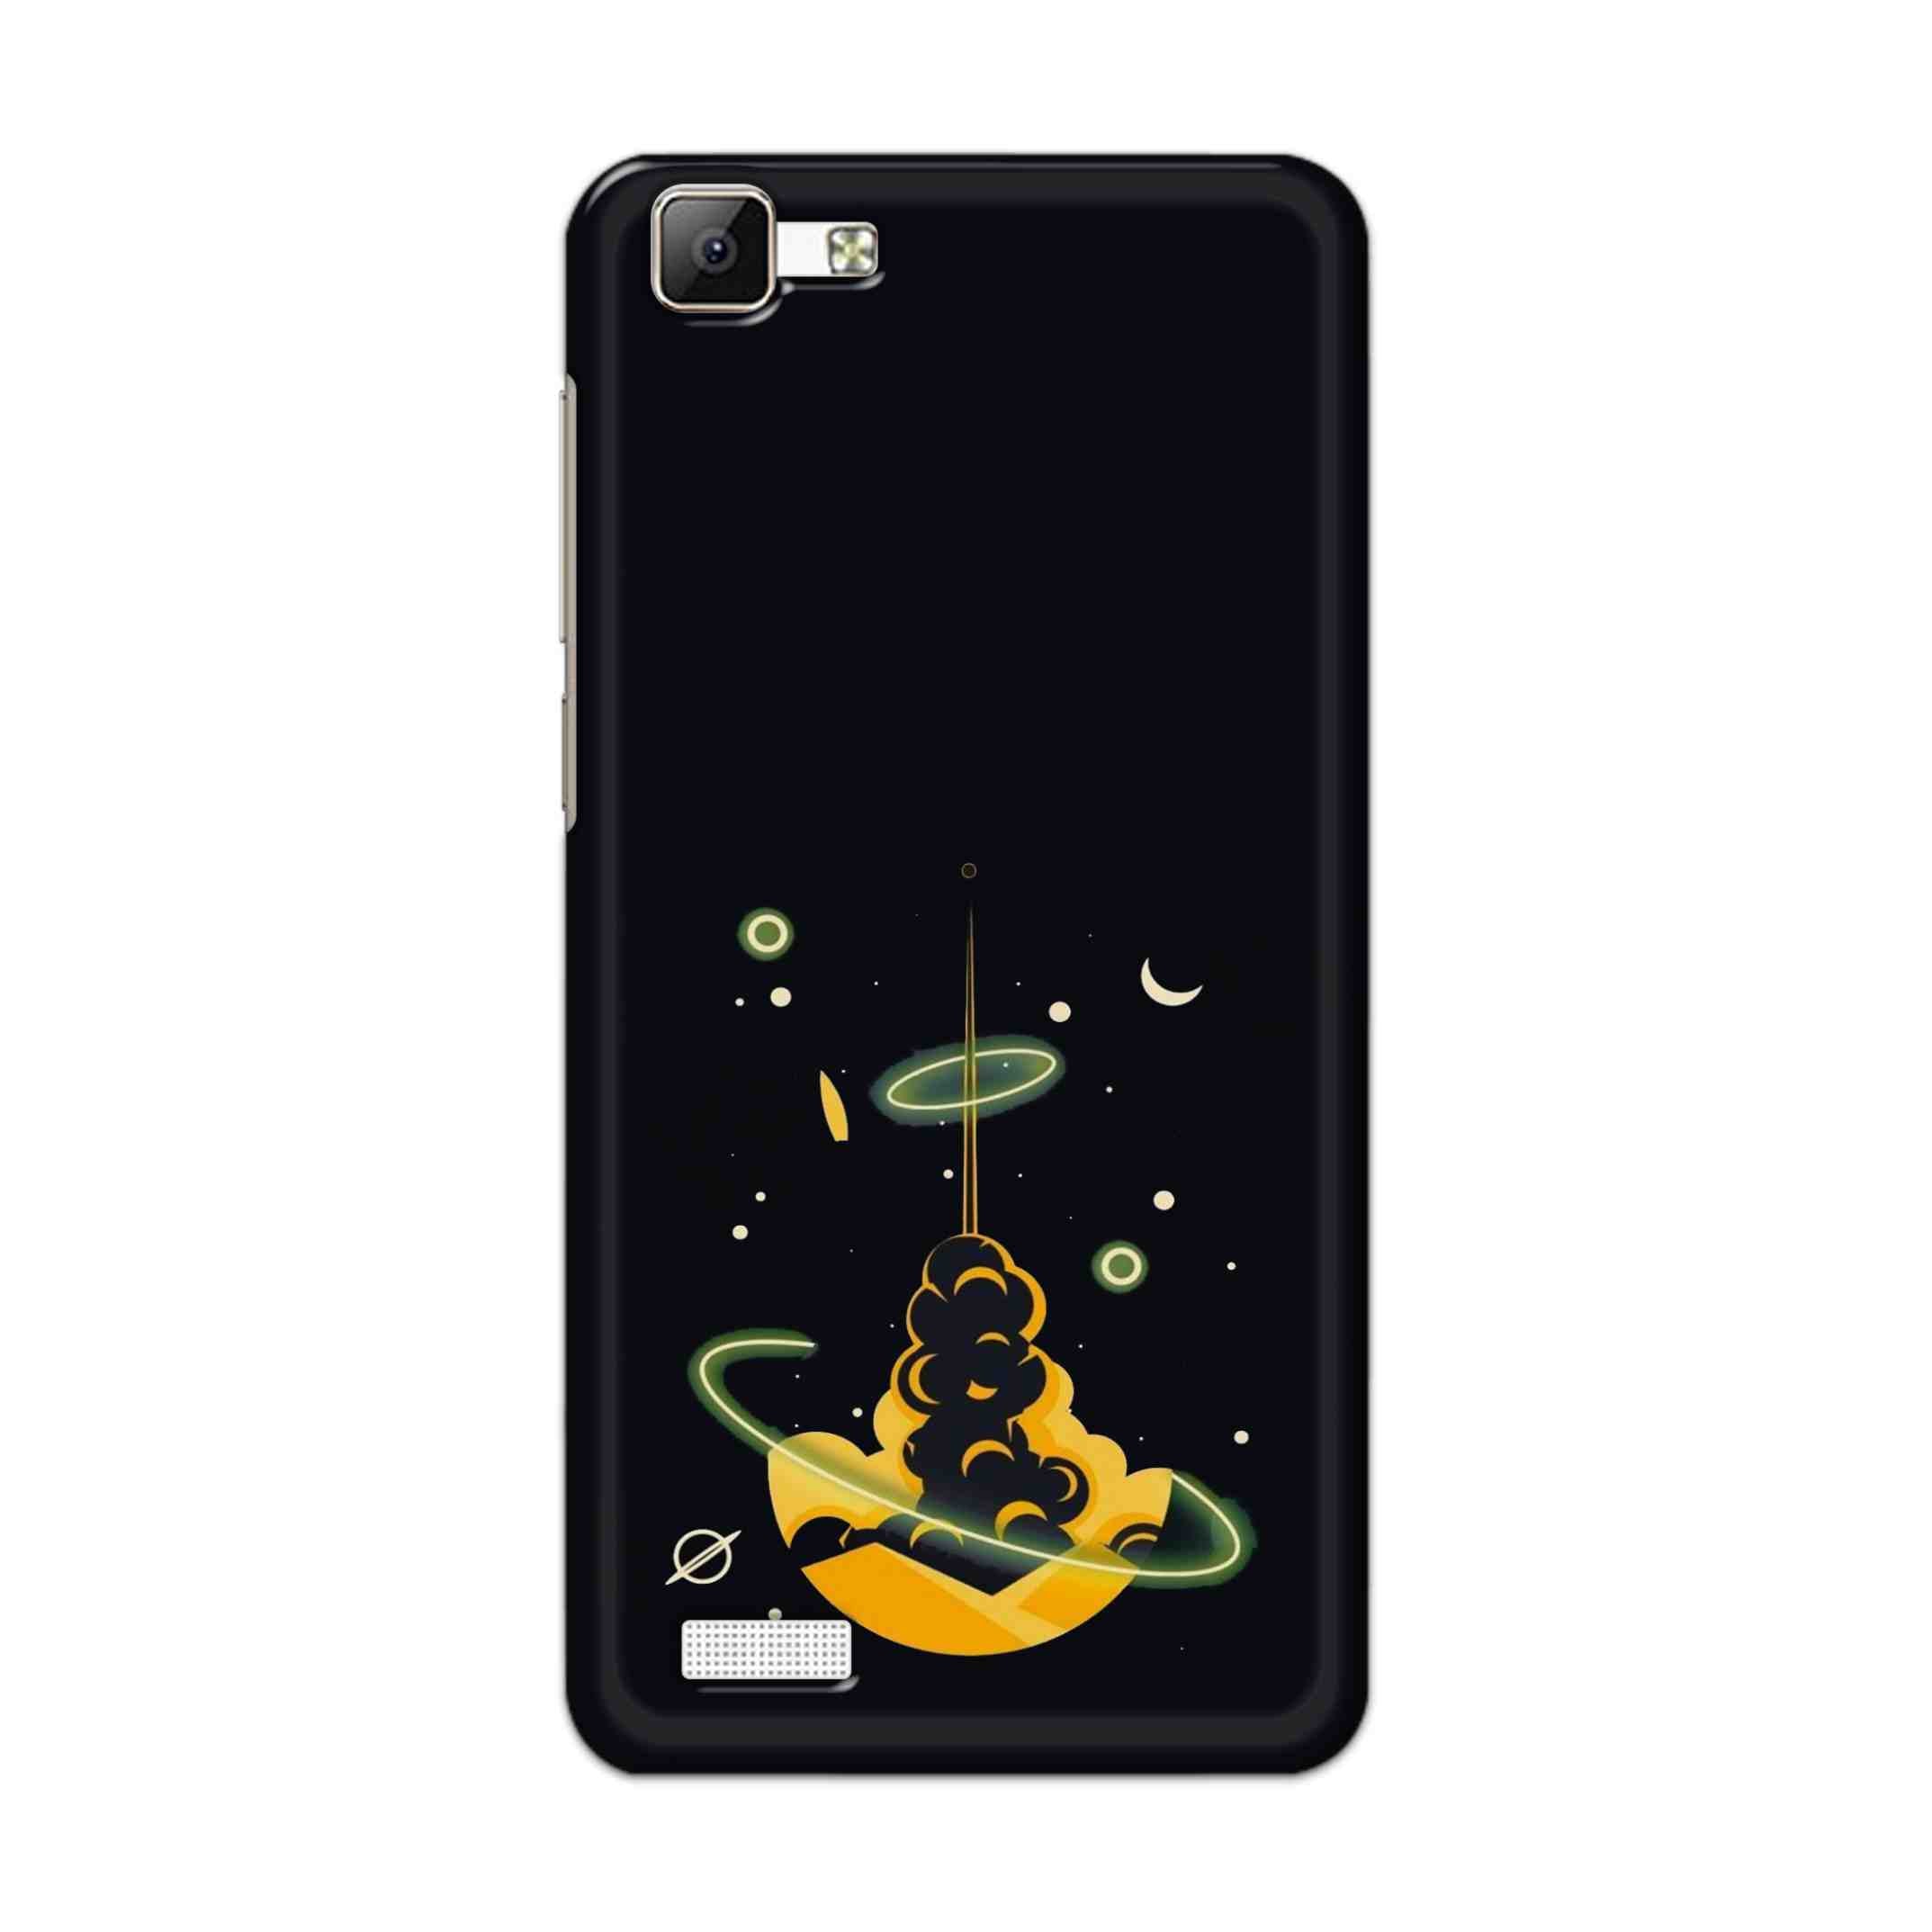 Buy Moon Hard Back Mobile Phone Case Cover For Vivo Y35 Online